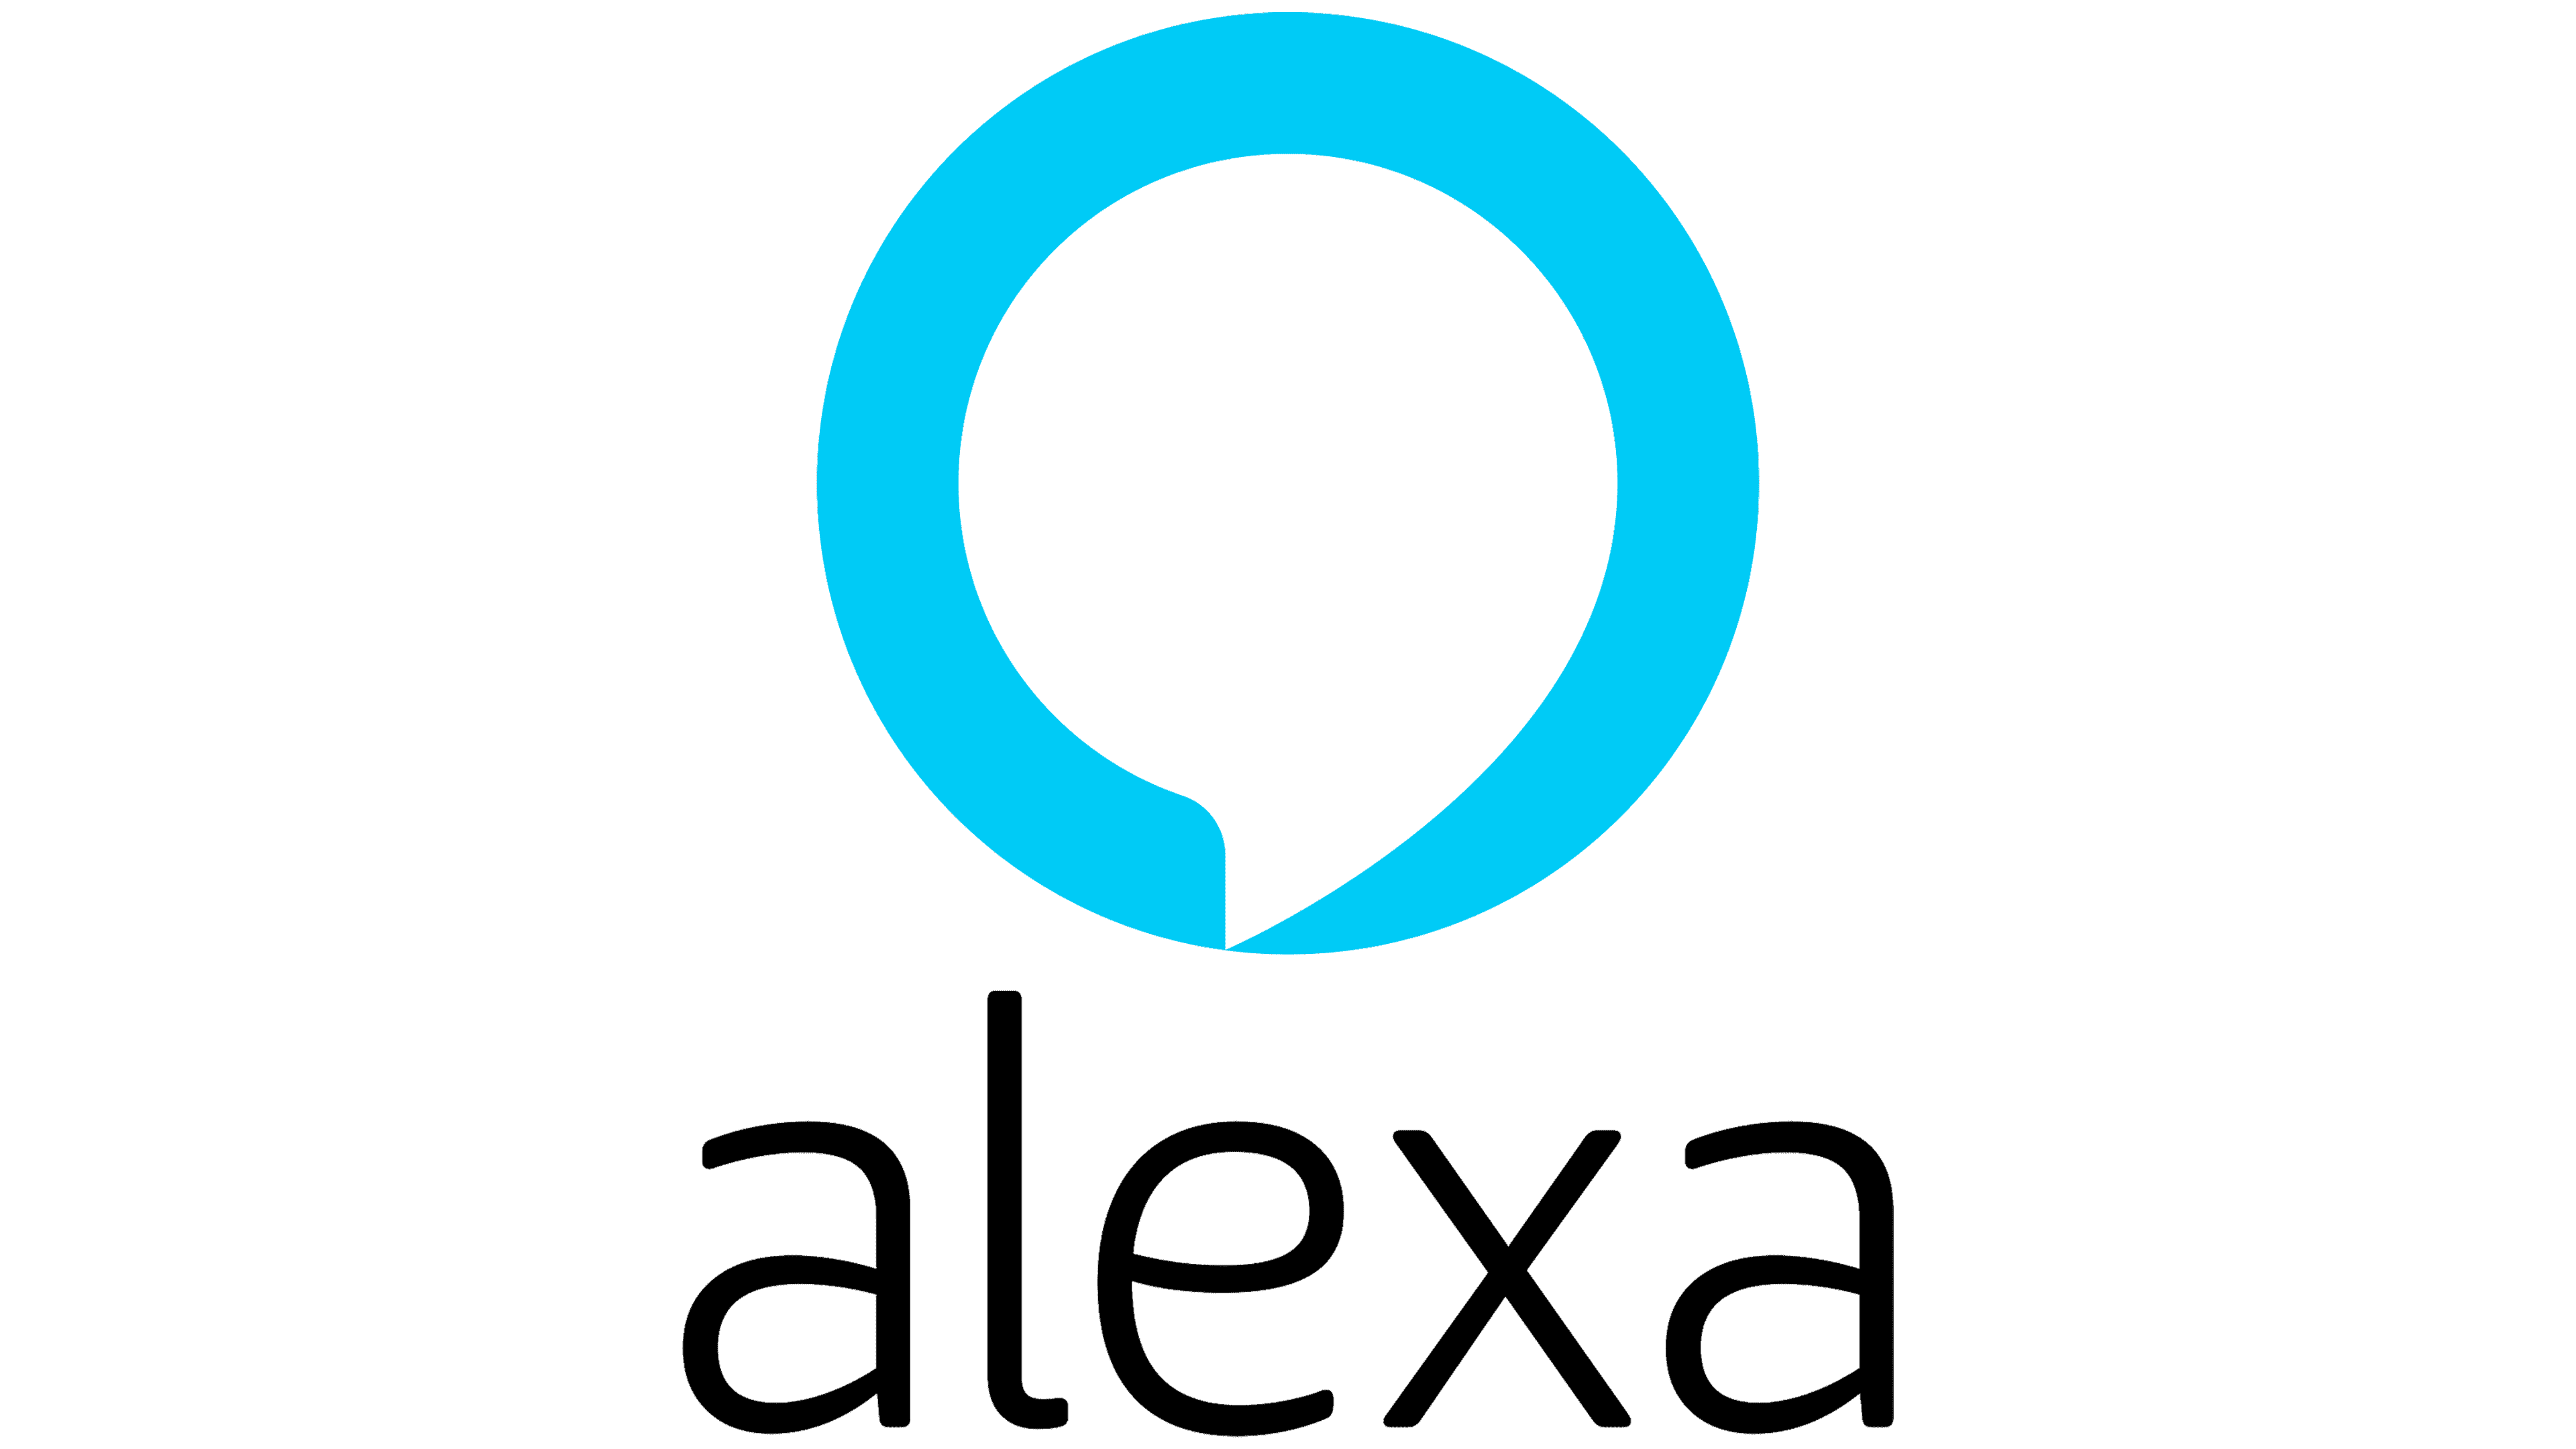 Alexa Logo PNG Transparent & SVG Vector - Freebie Supply